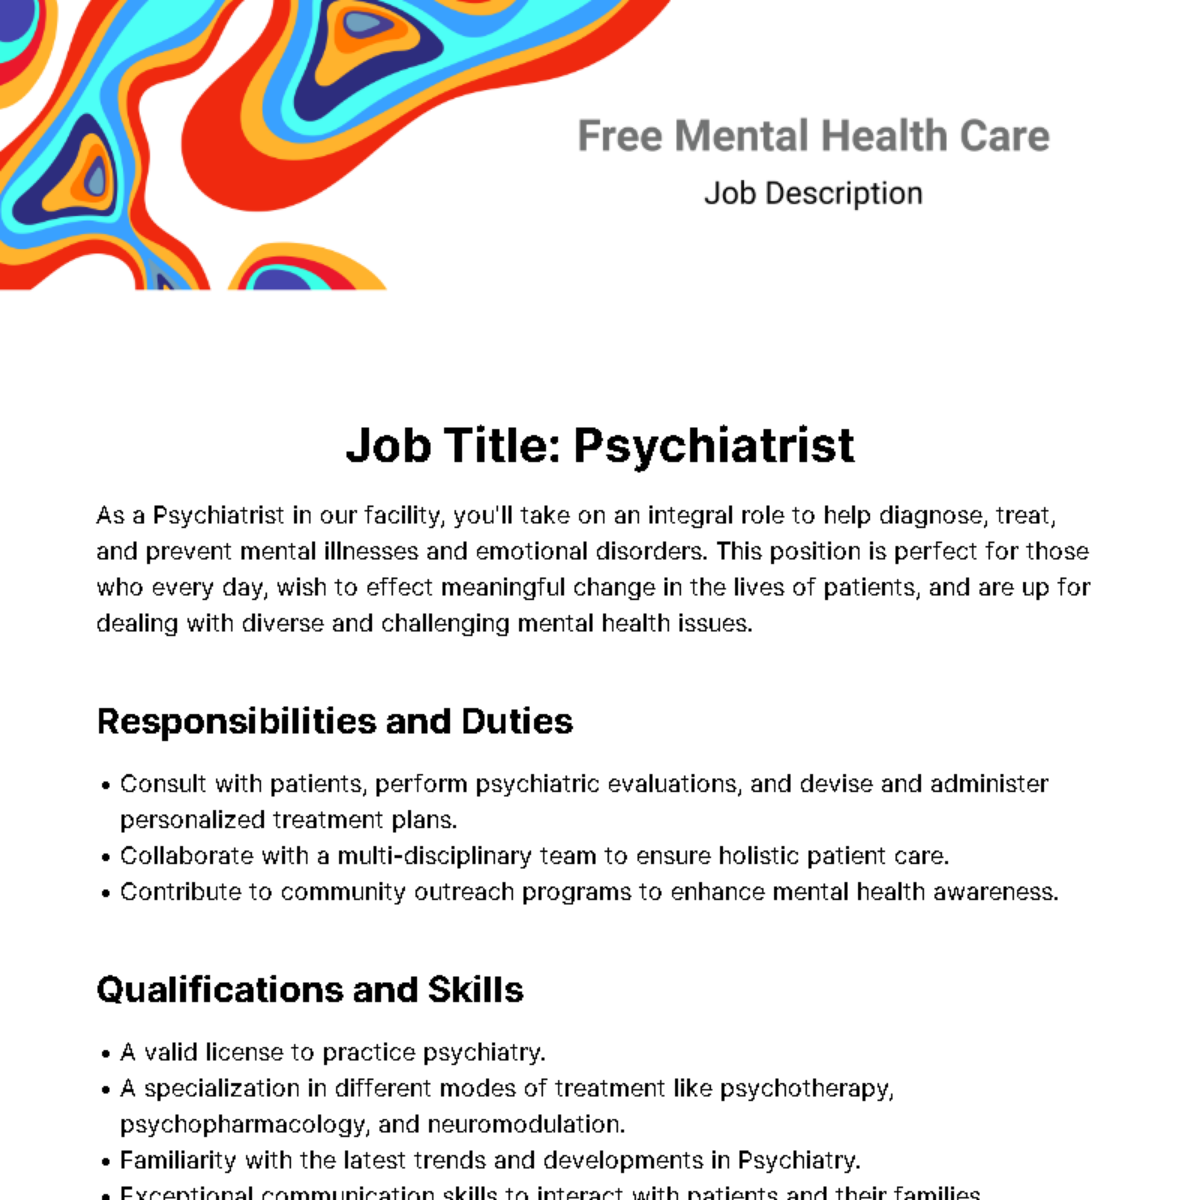 Free Mental Health Care Job Description Template